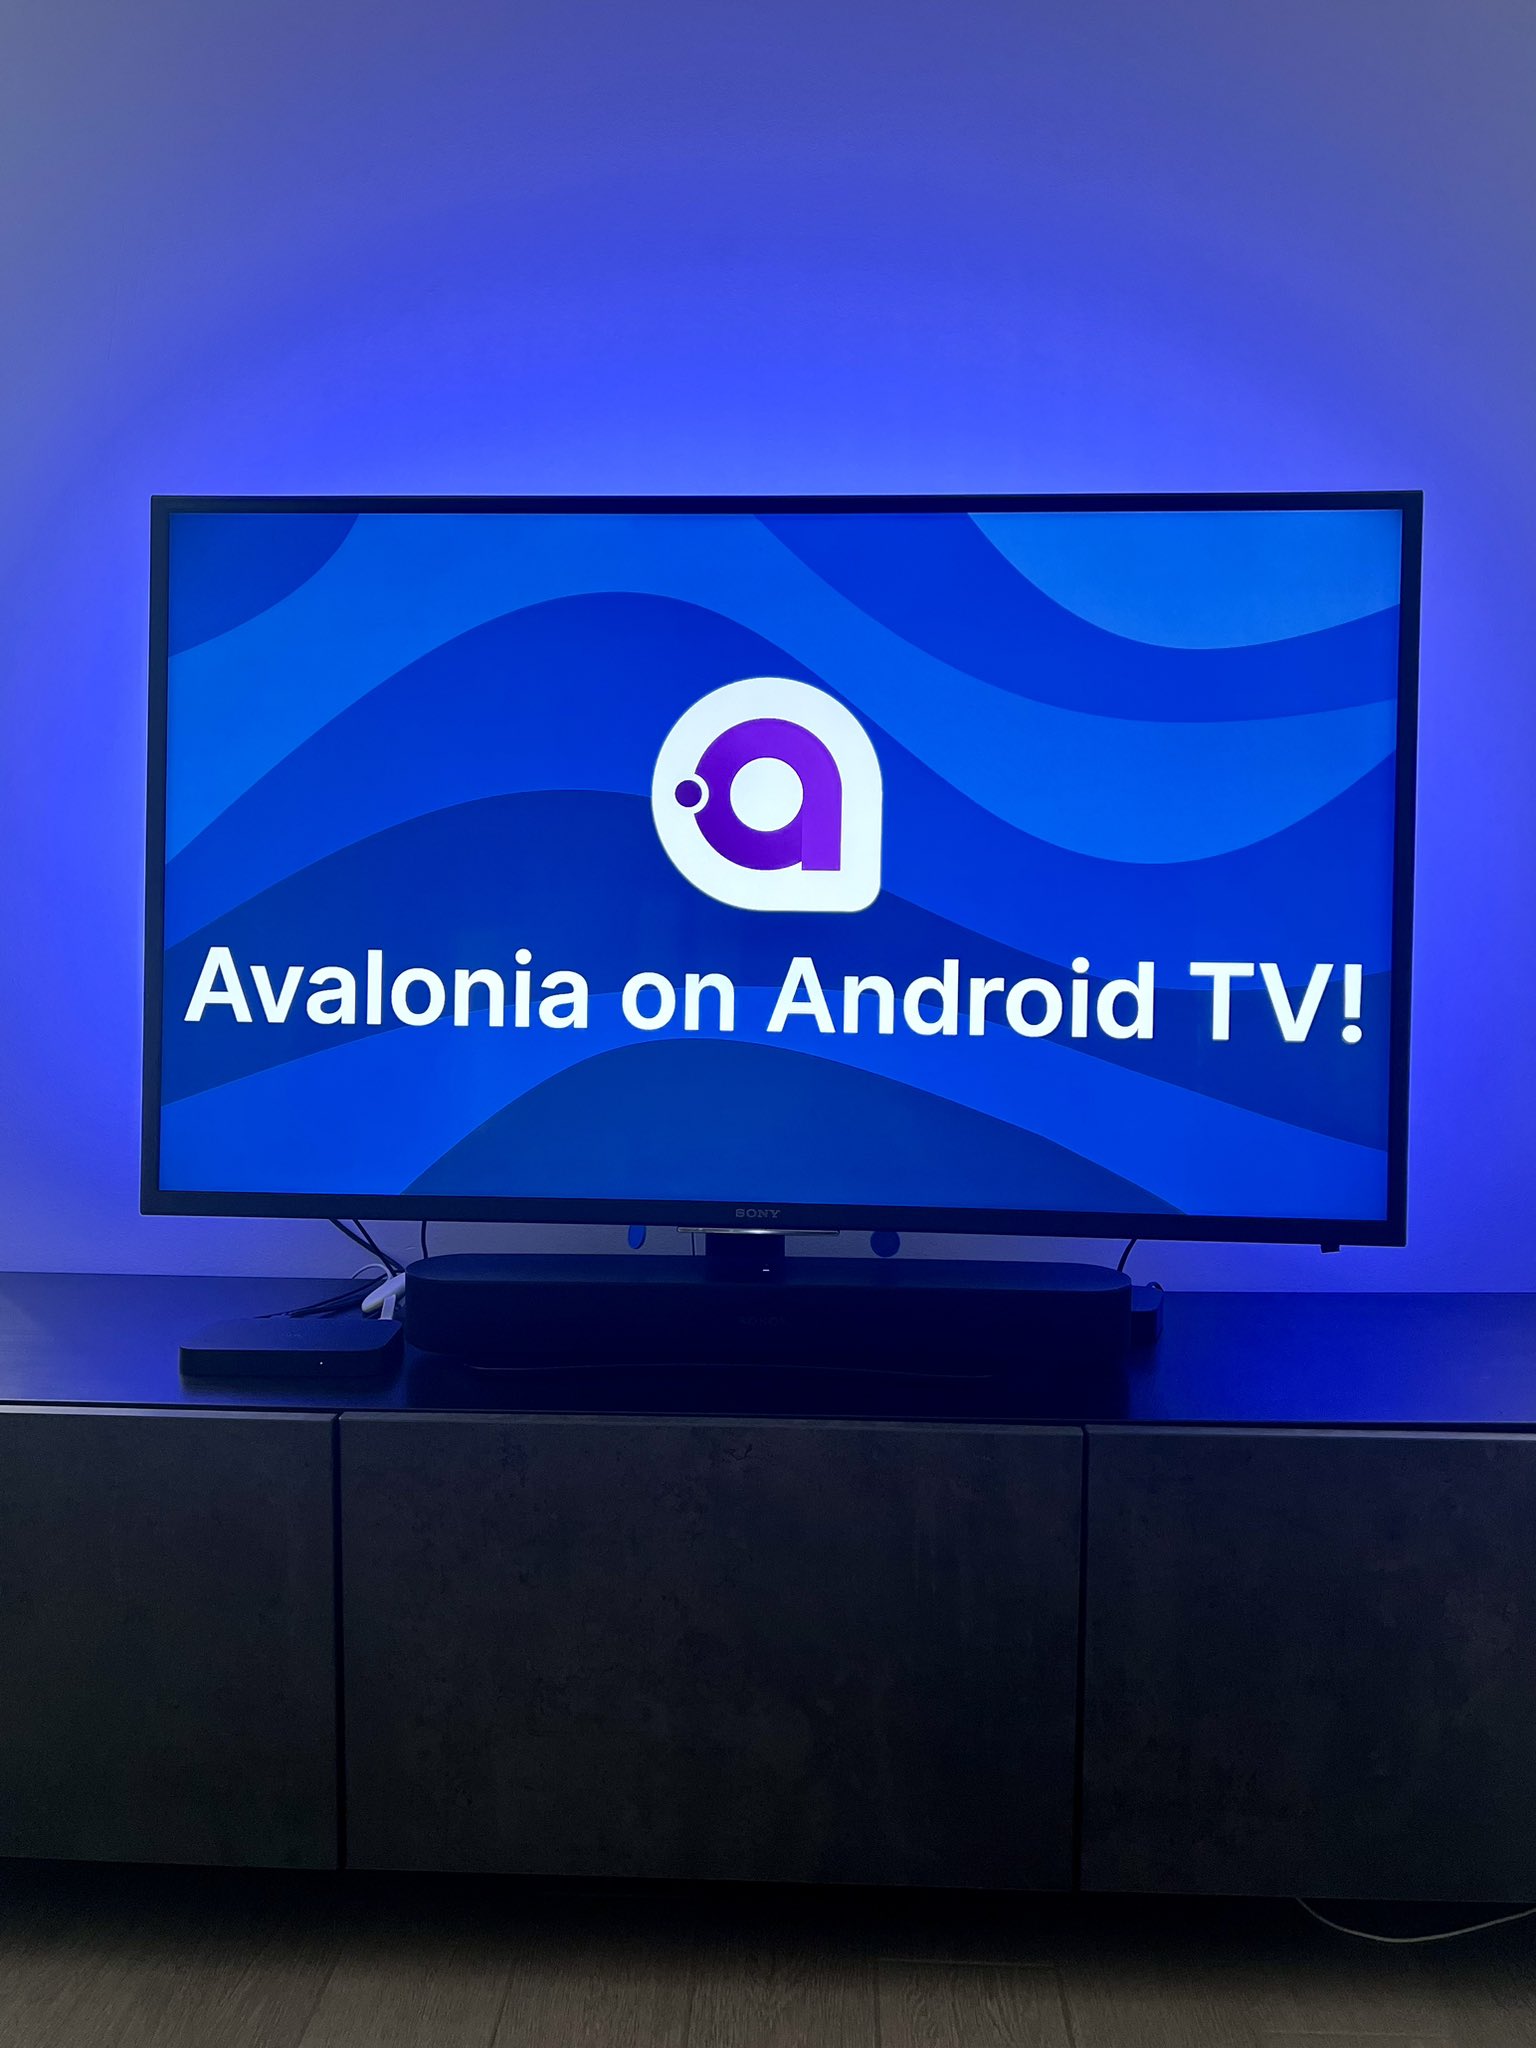 Avalonia App running on Android TV